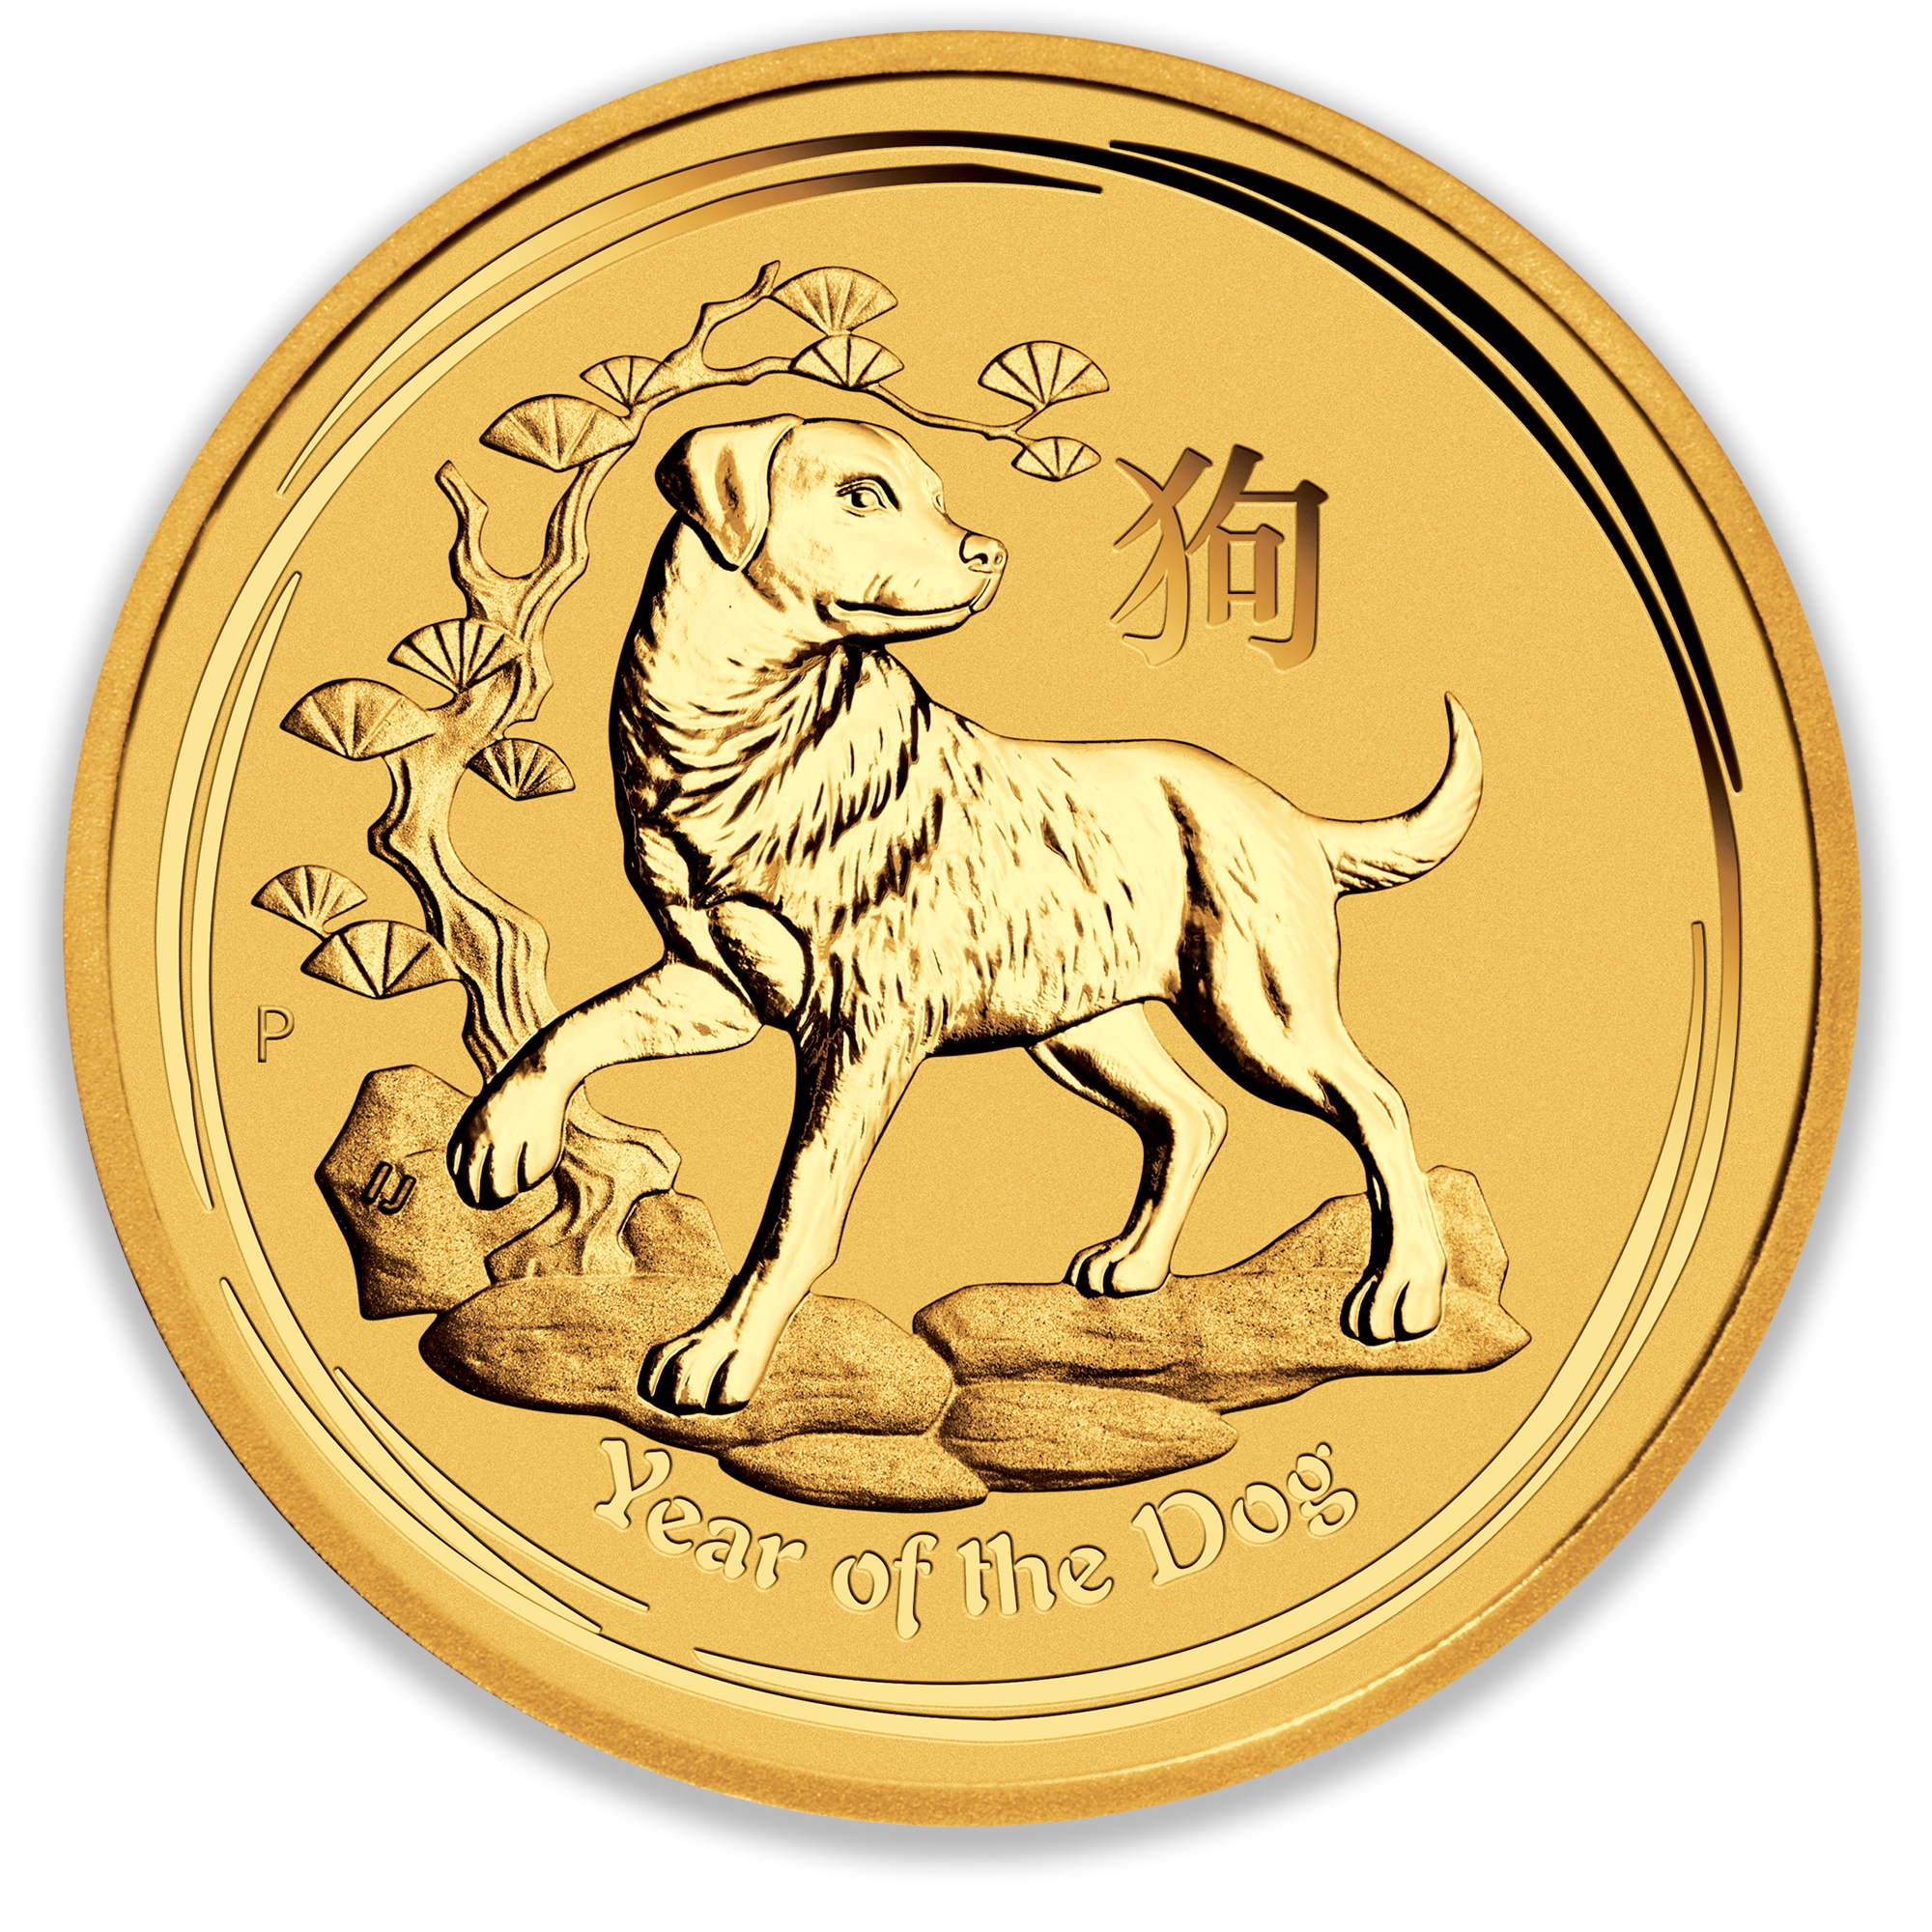 Bendog монета. Золотая монета Лунар год собаки. Золотые монеты Лунар Австралия. Золотые монеты австралийские Лунар II. Олотая монета «Лунар-2 год свинья».